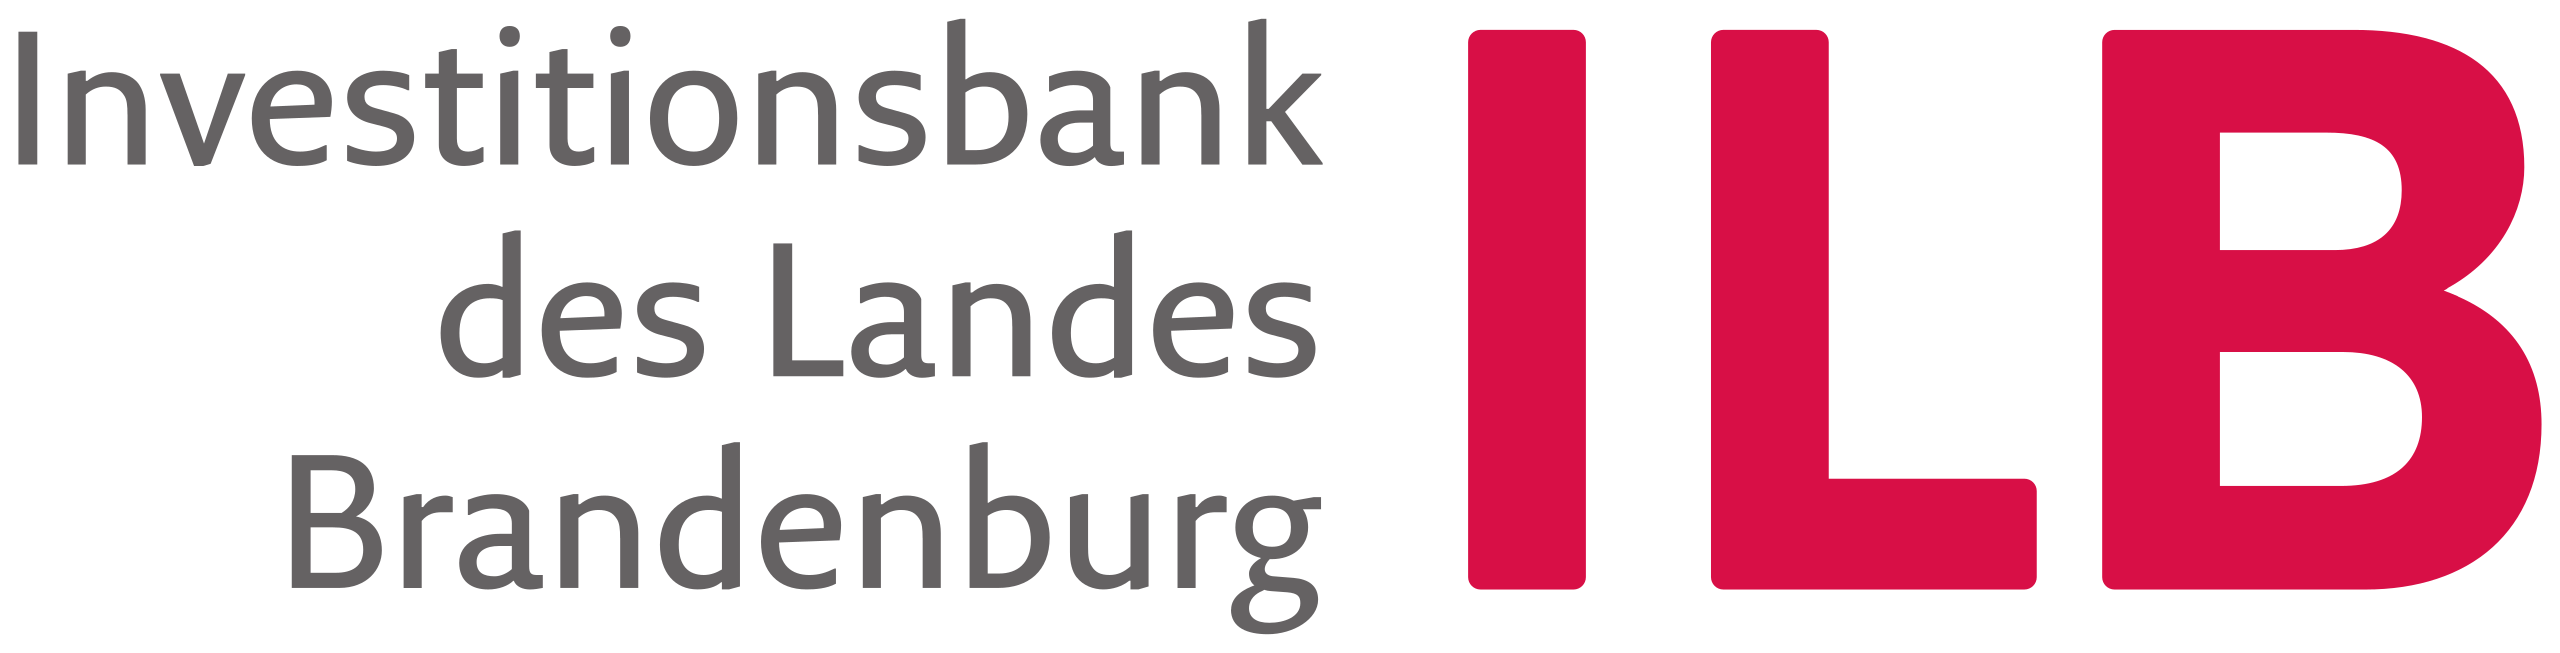 ILB logo transparent background